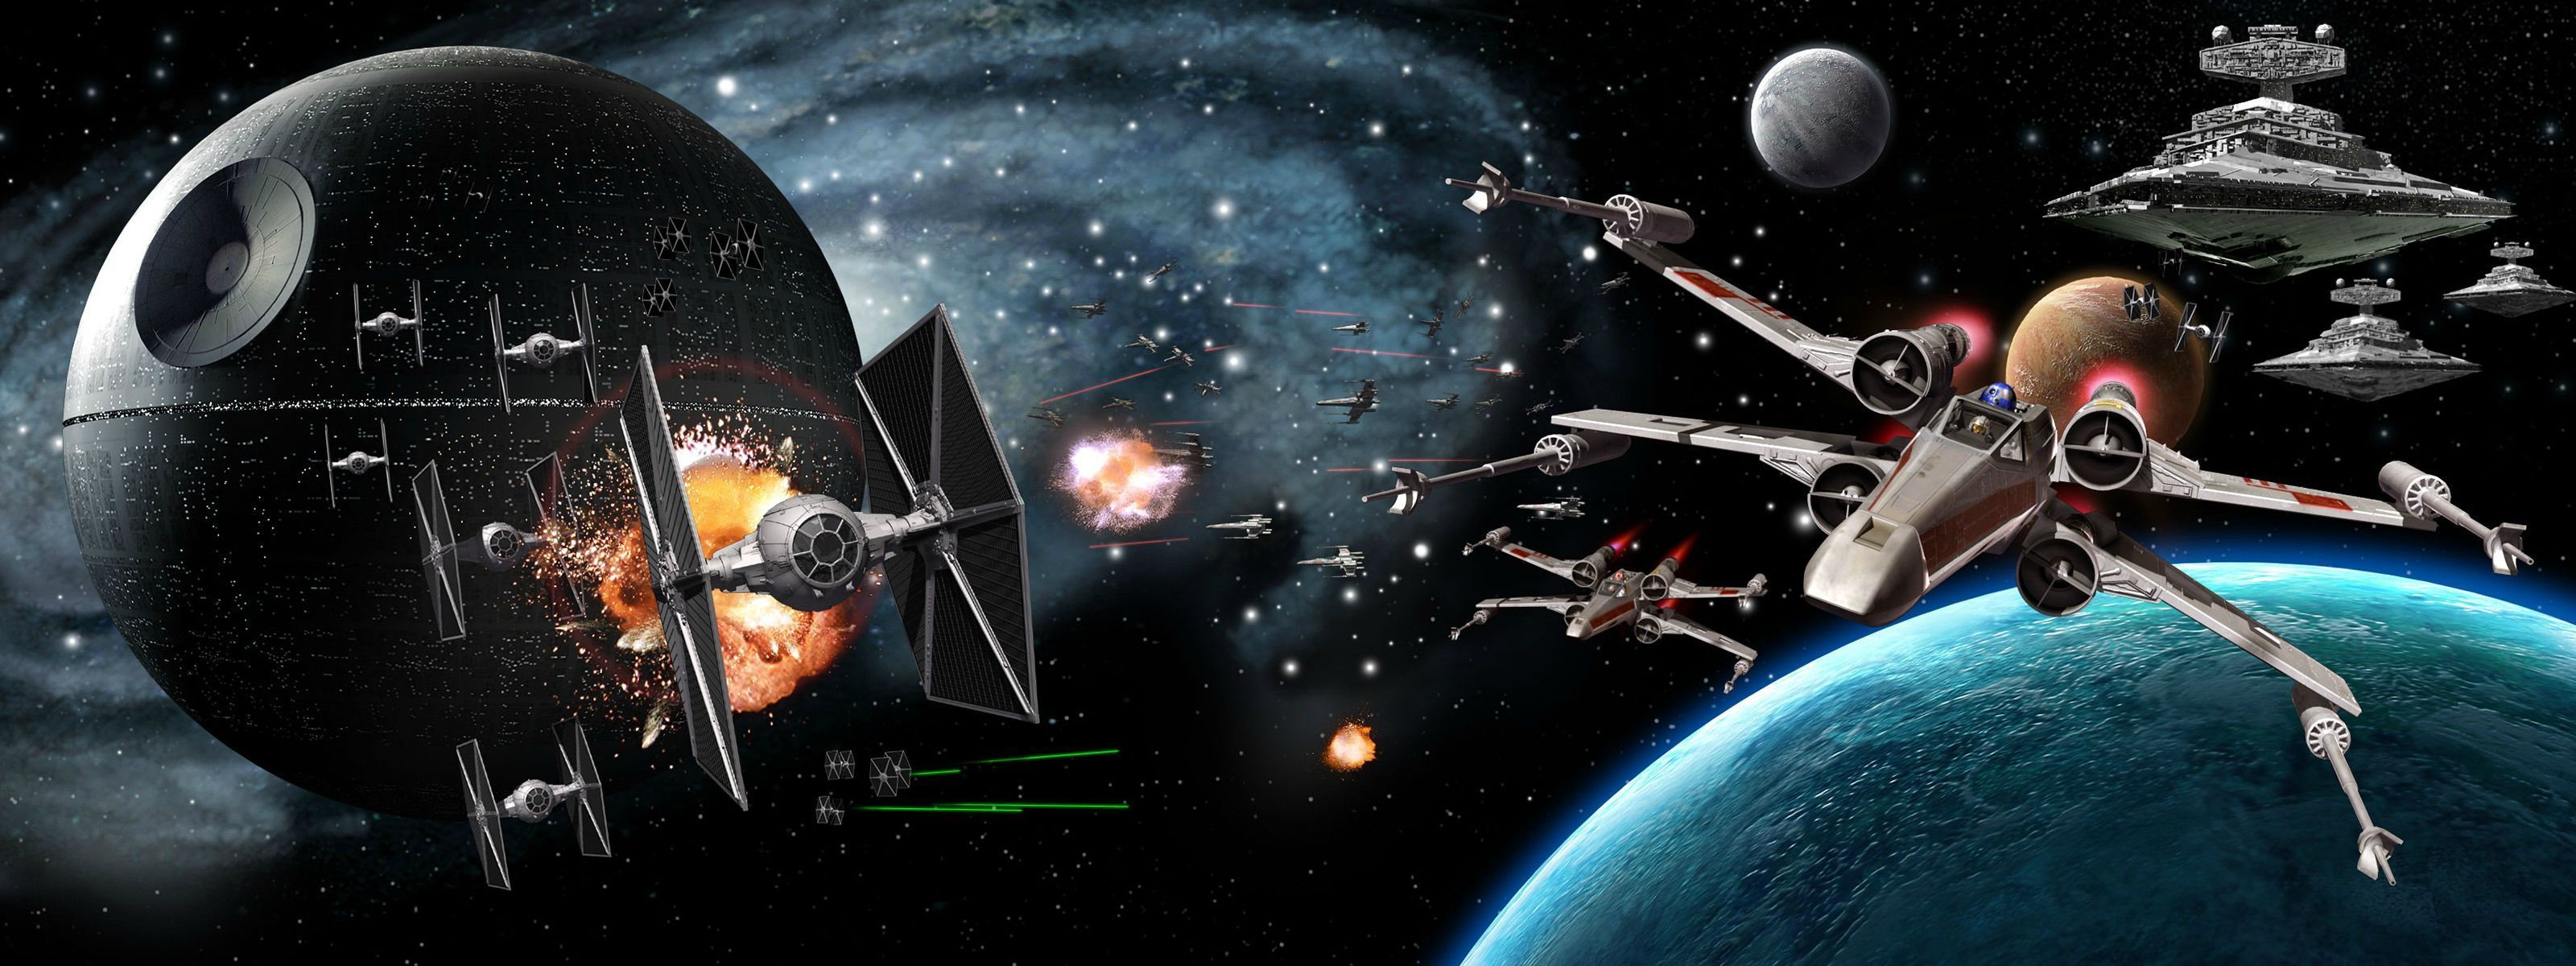 Dual screen background. Star wars wallpaper, Star wars awesome, Star wars background